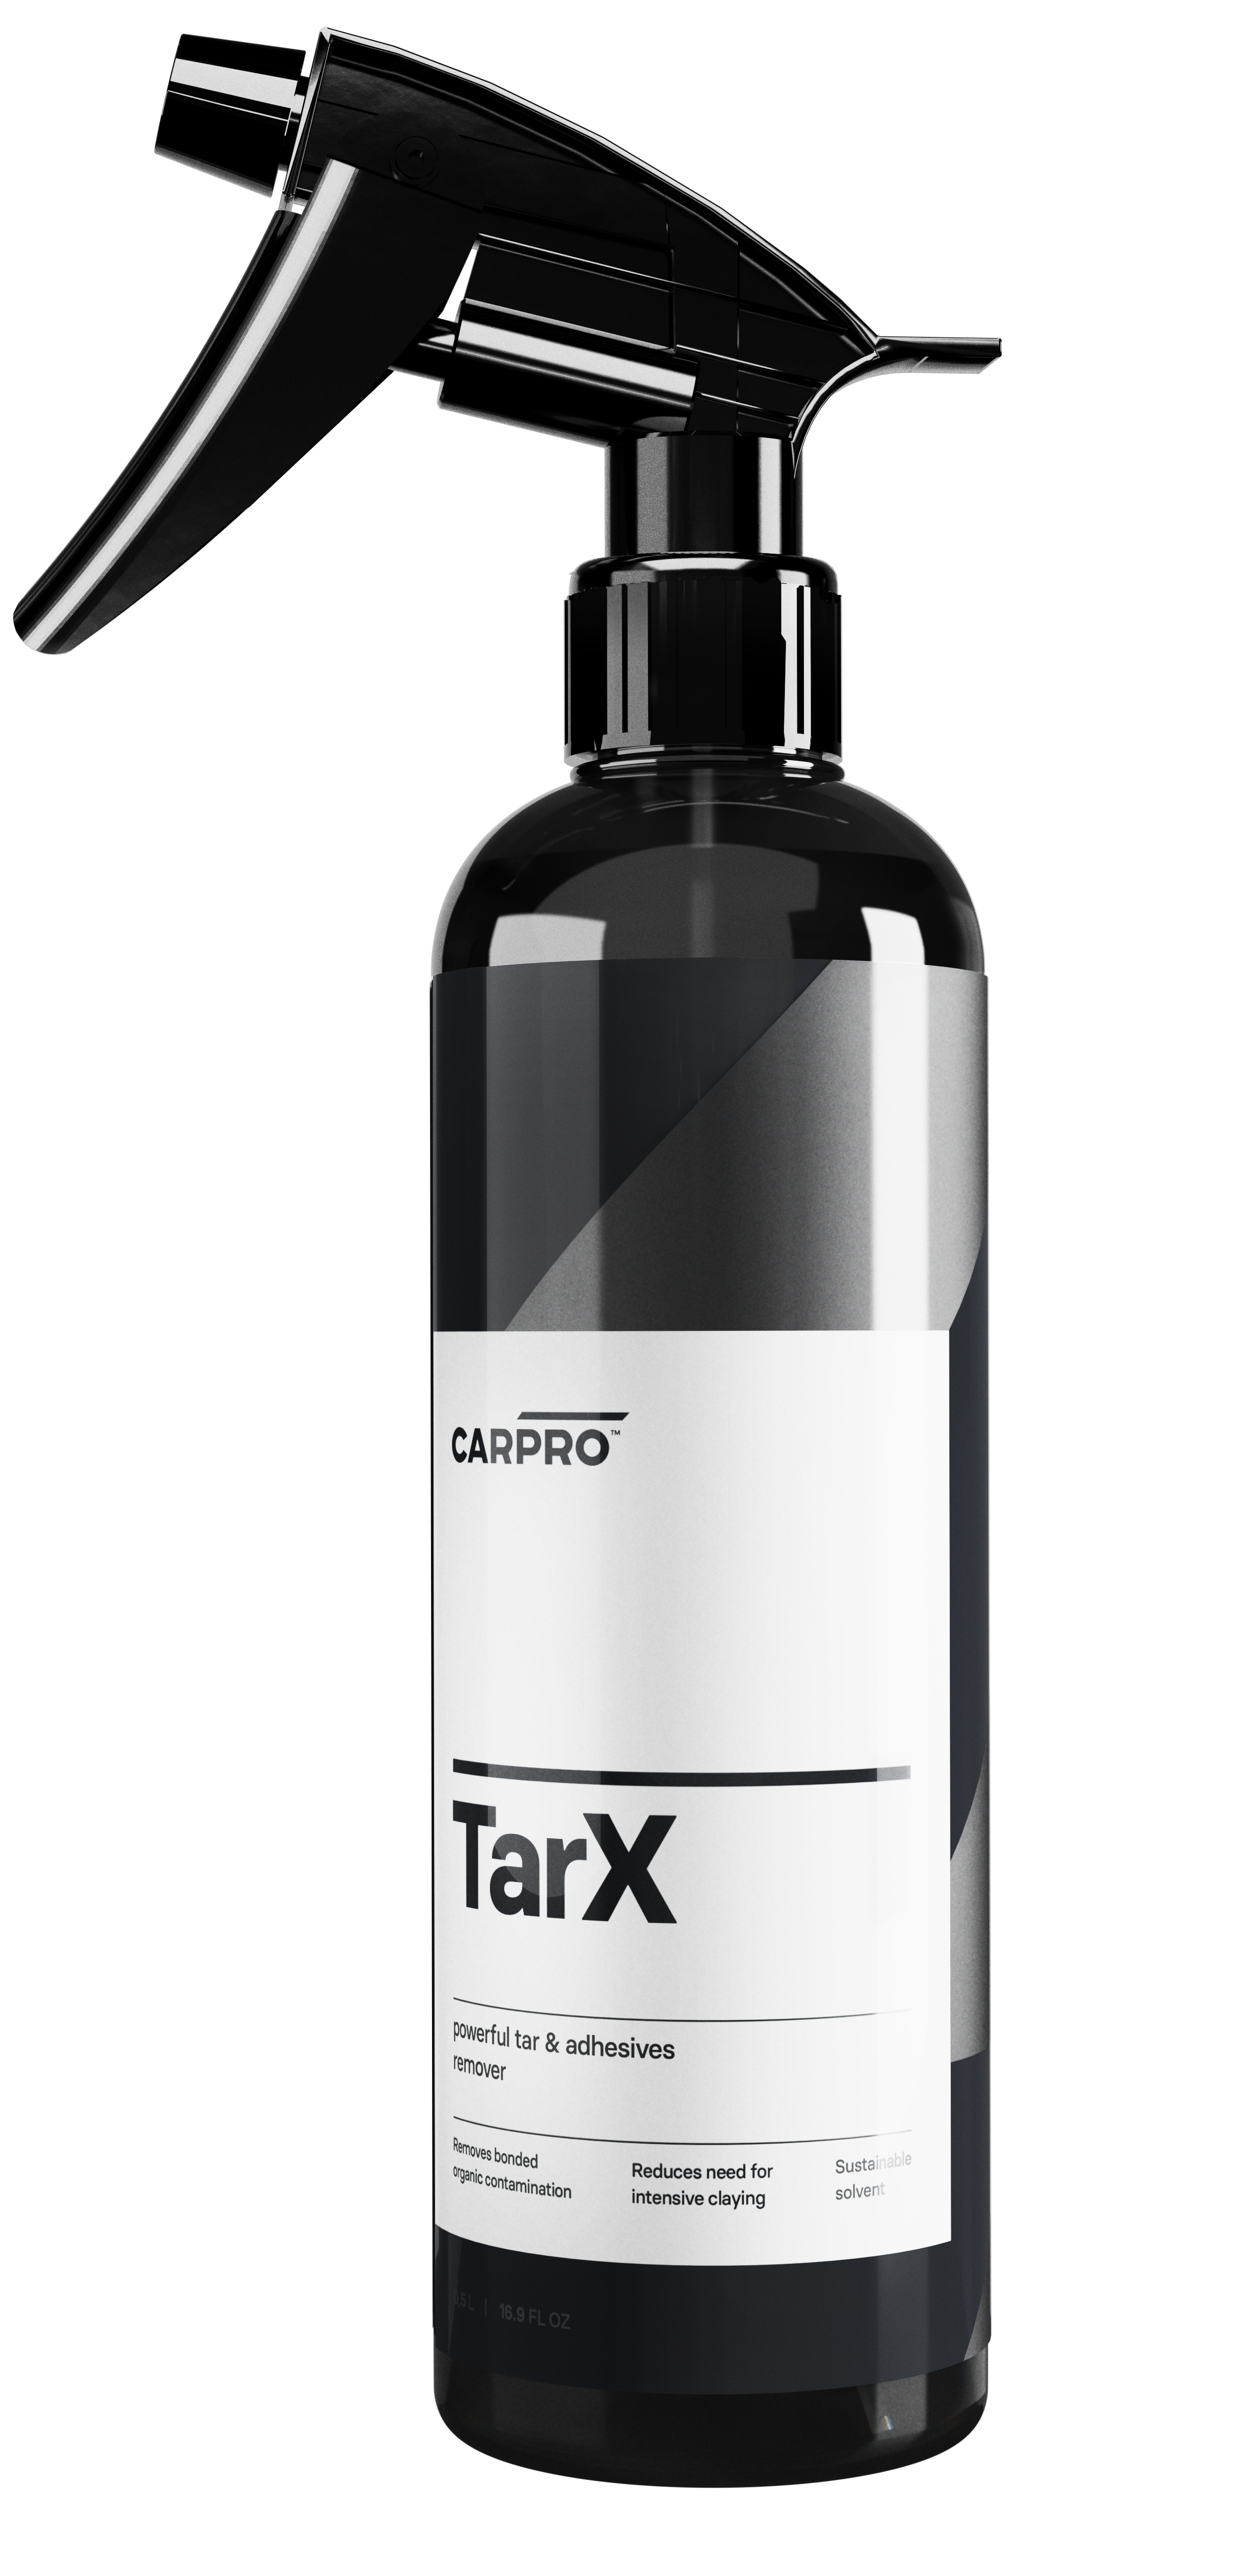 CarPro Descale 1 Liter | Acid Wash Car Shampoo